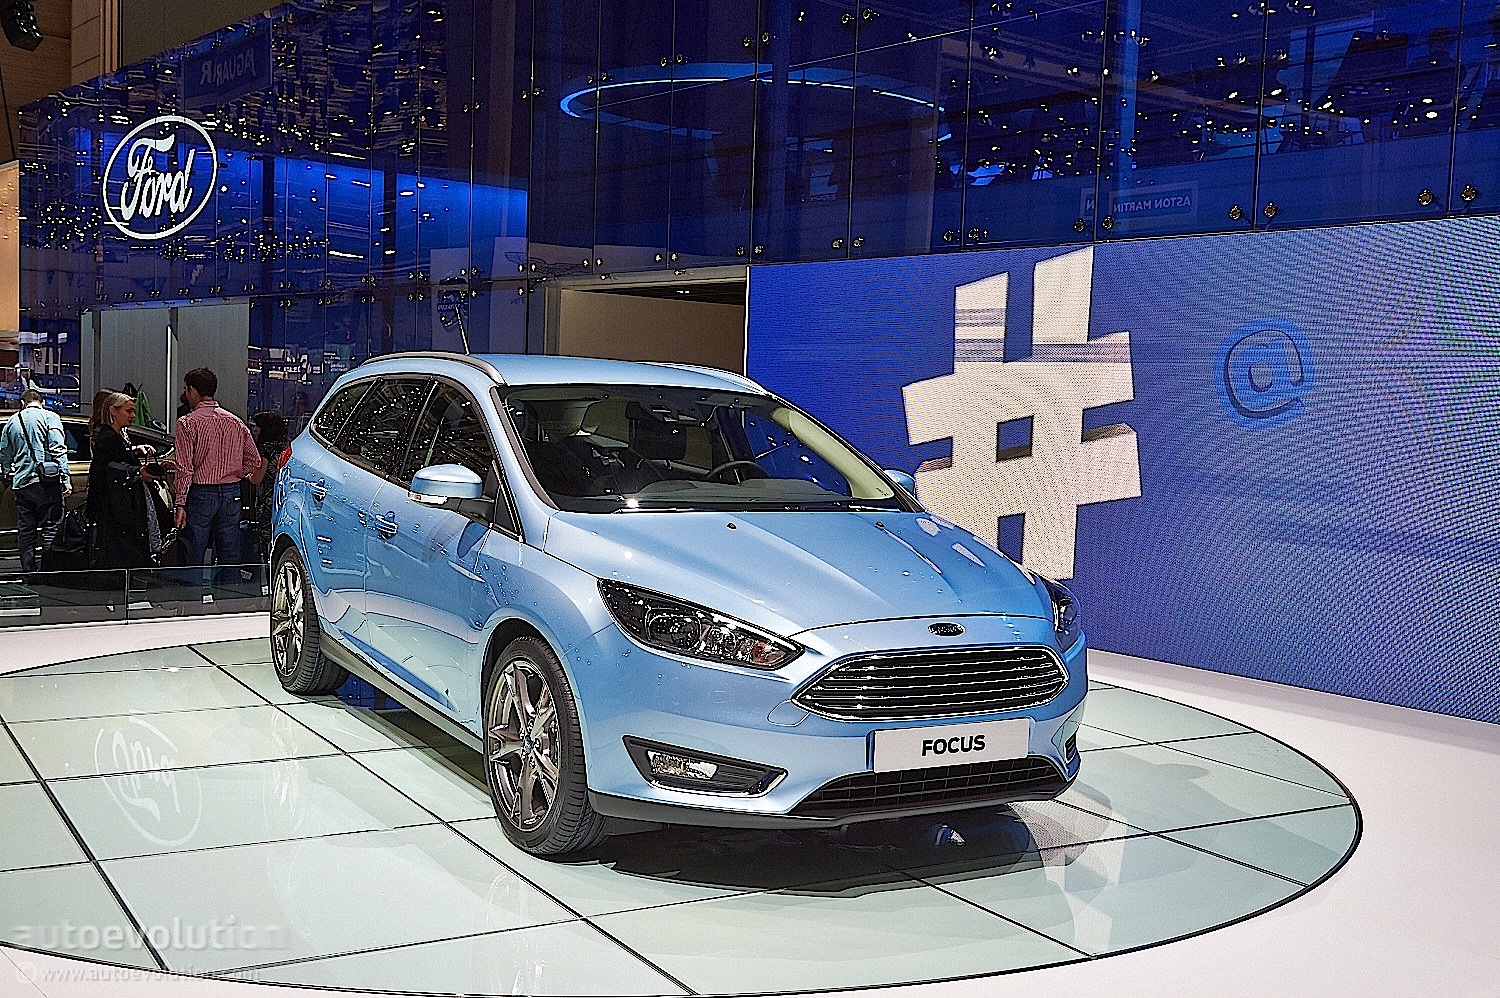 2014 Ford Focus Hatchback, Estate Bow in Geneva [Live Photos][Update ...